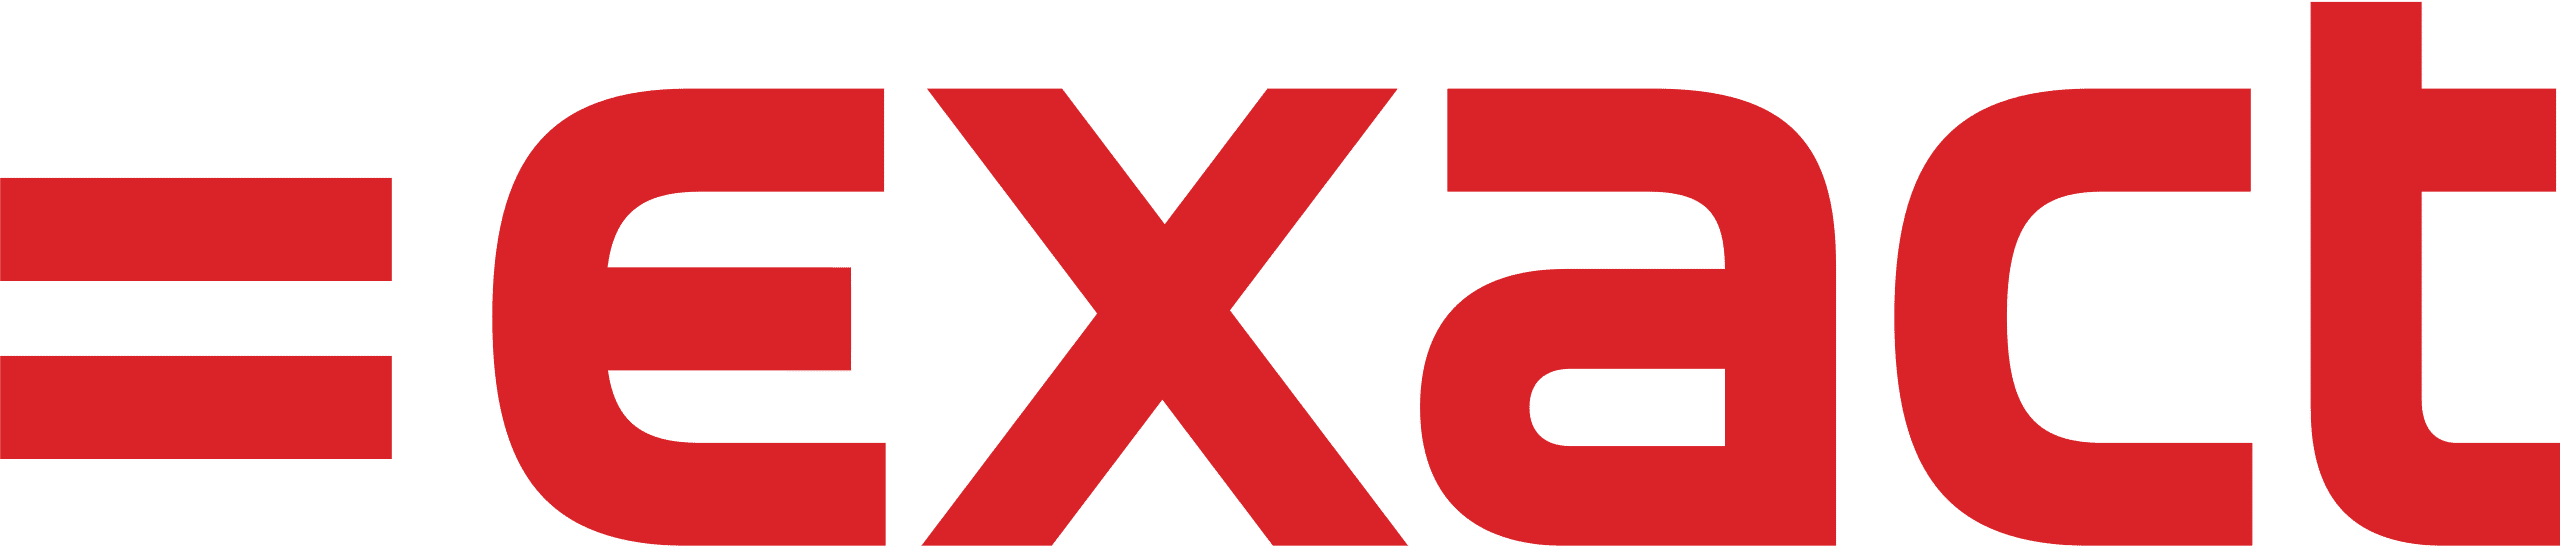 2560px-Exact_logo.svg